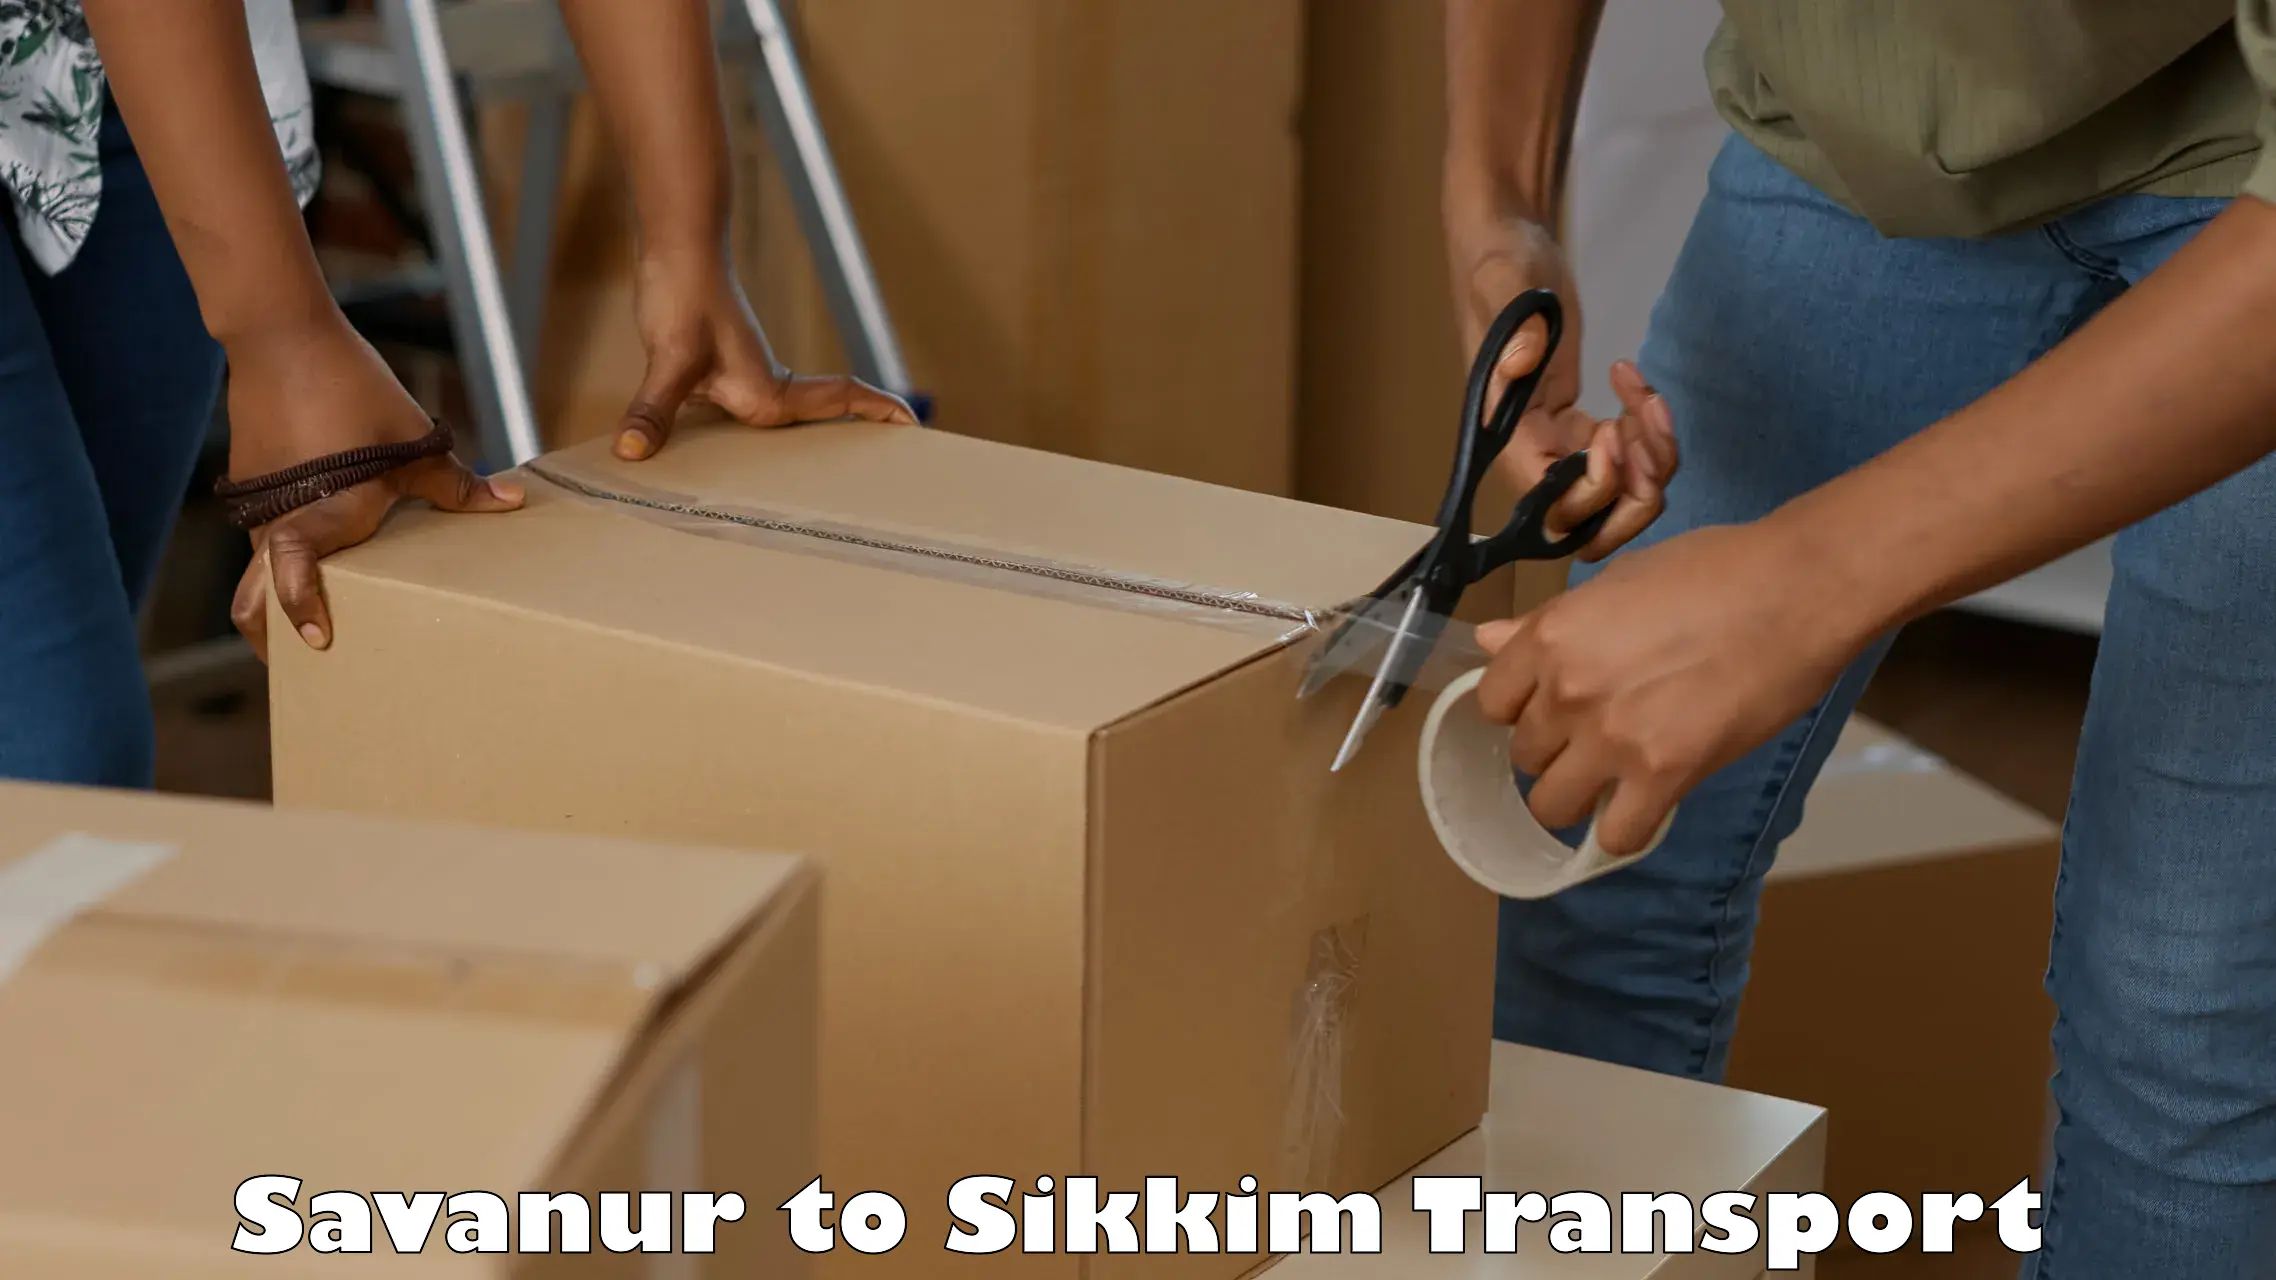 Transport in sharing Savanur to East Sikkim